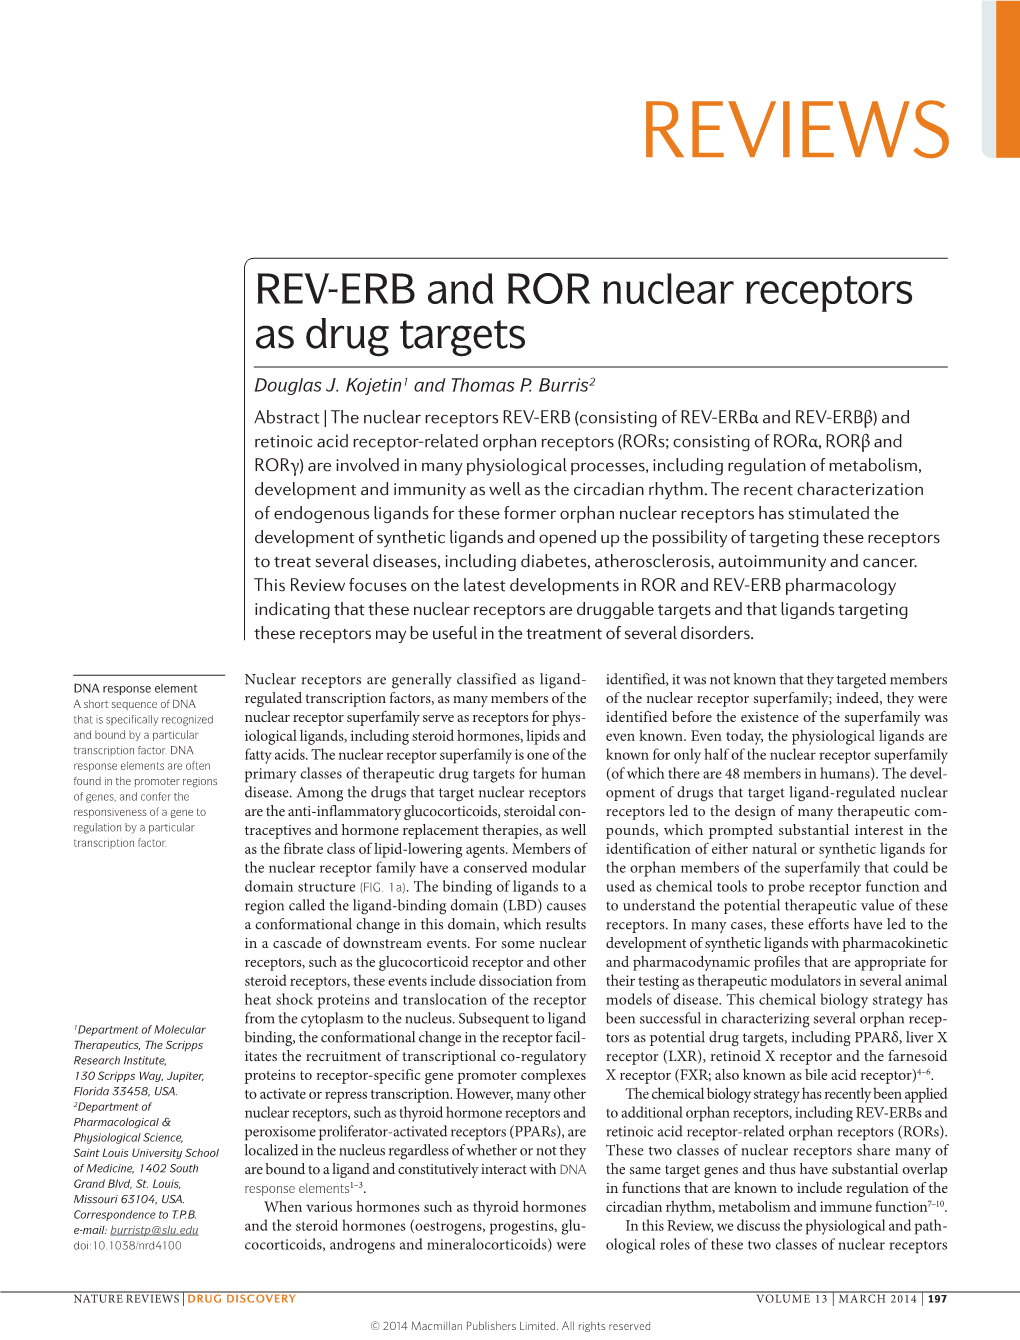 REV-ERB and ROR Nuclear Receptors As Drug Targets